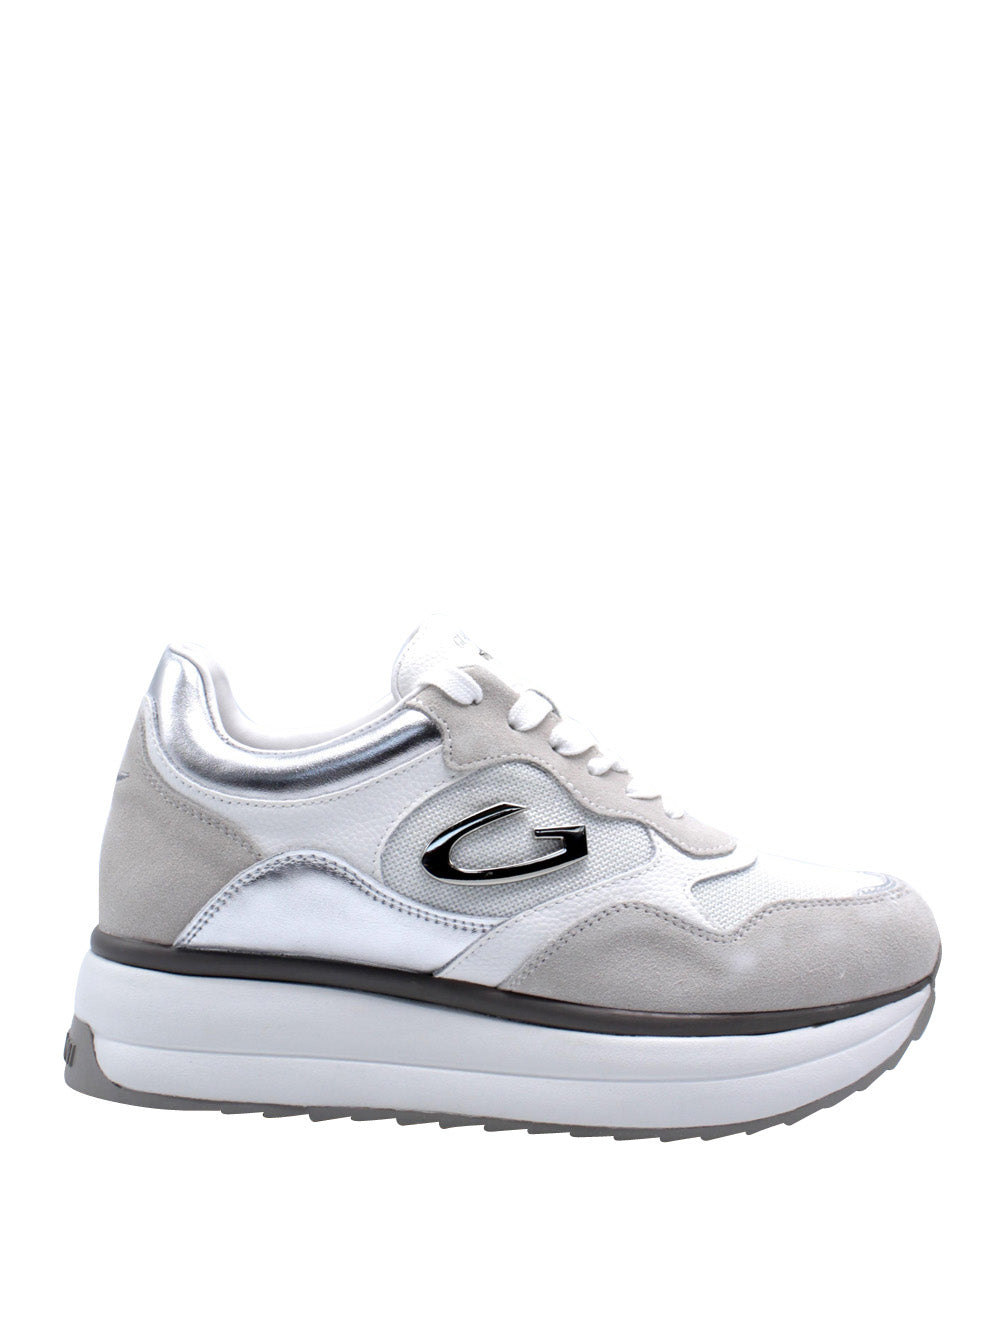 GUARDIANI Sneakers platform Donna - Beige modello AGW430200